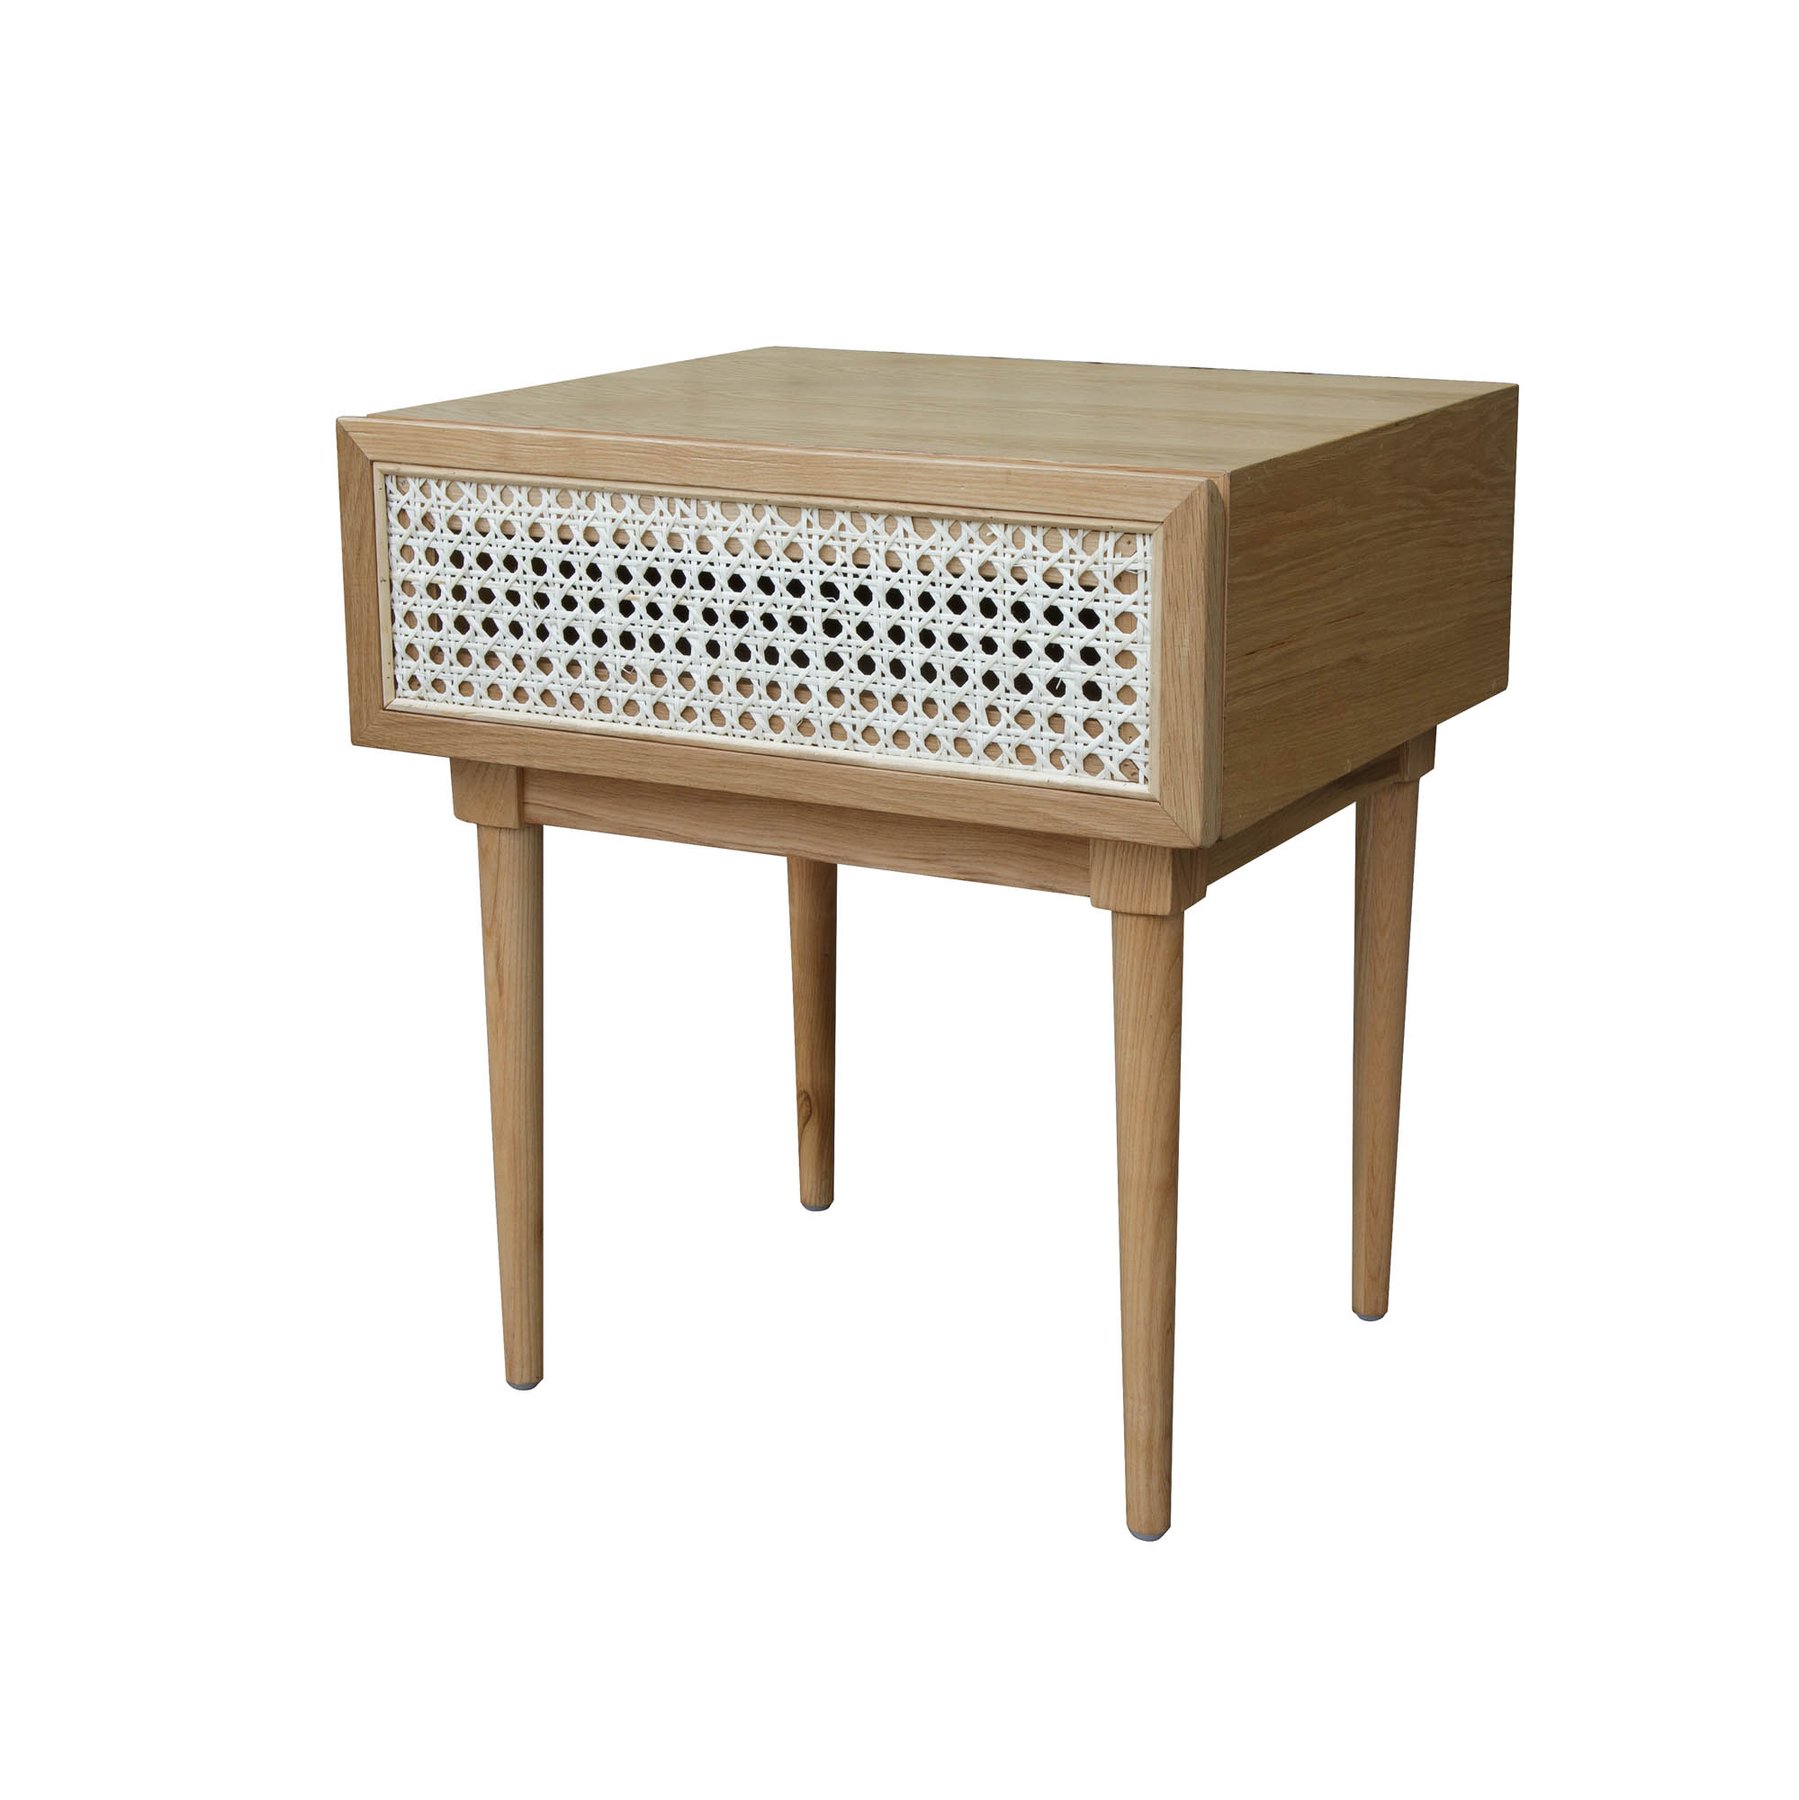 Cane Side Table, Natural, Q-Living Furniture